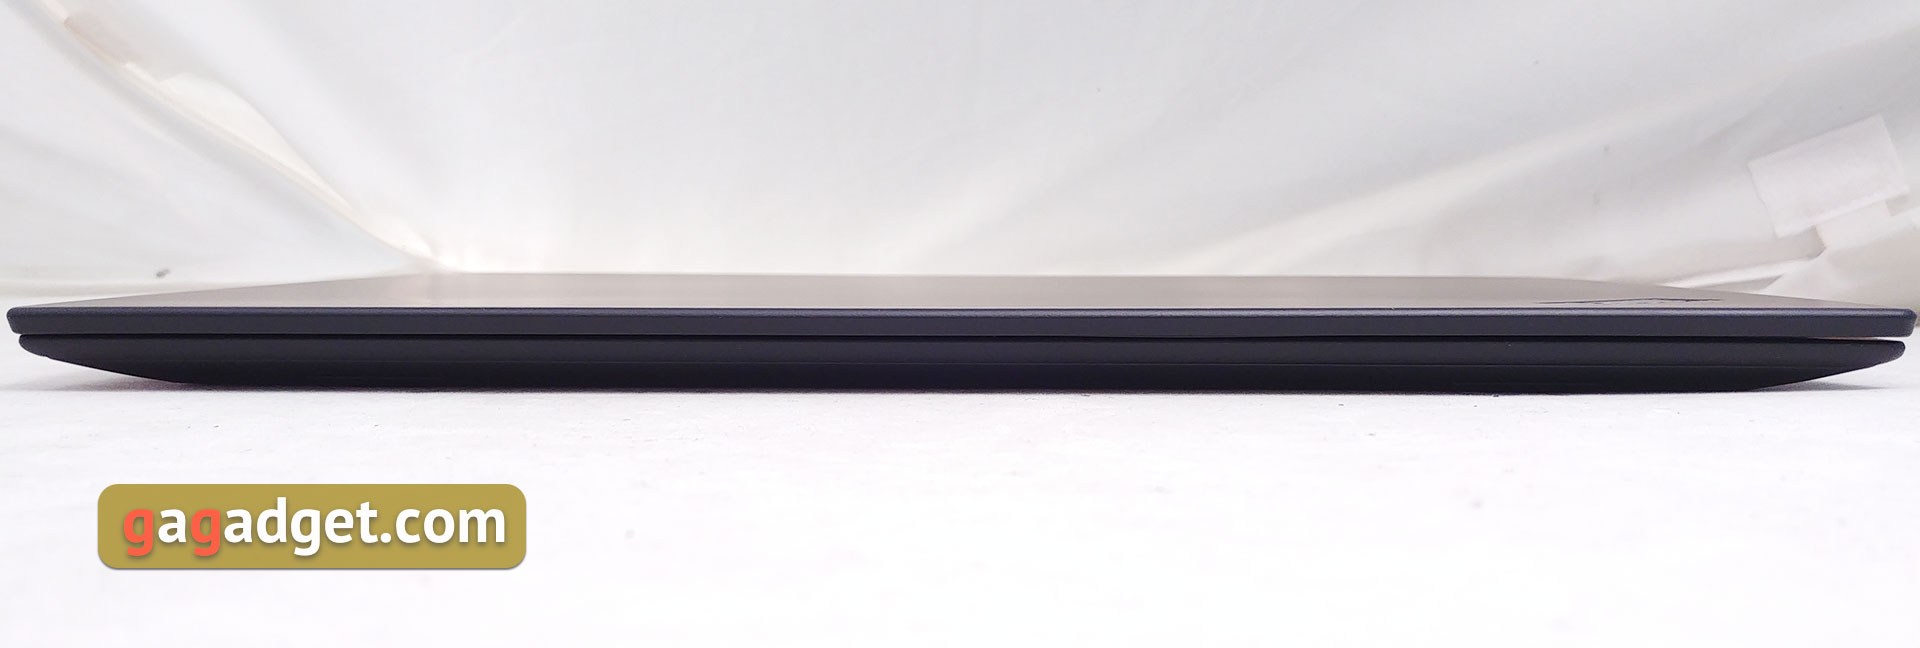 Обзор Lenovo ThinkPad X1 Carbon 6th Gen: топовый бизнес-ультрабук с HDR-экраном-16